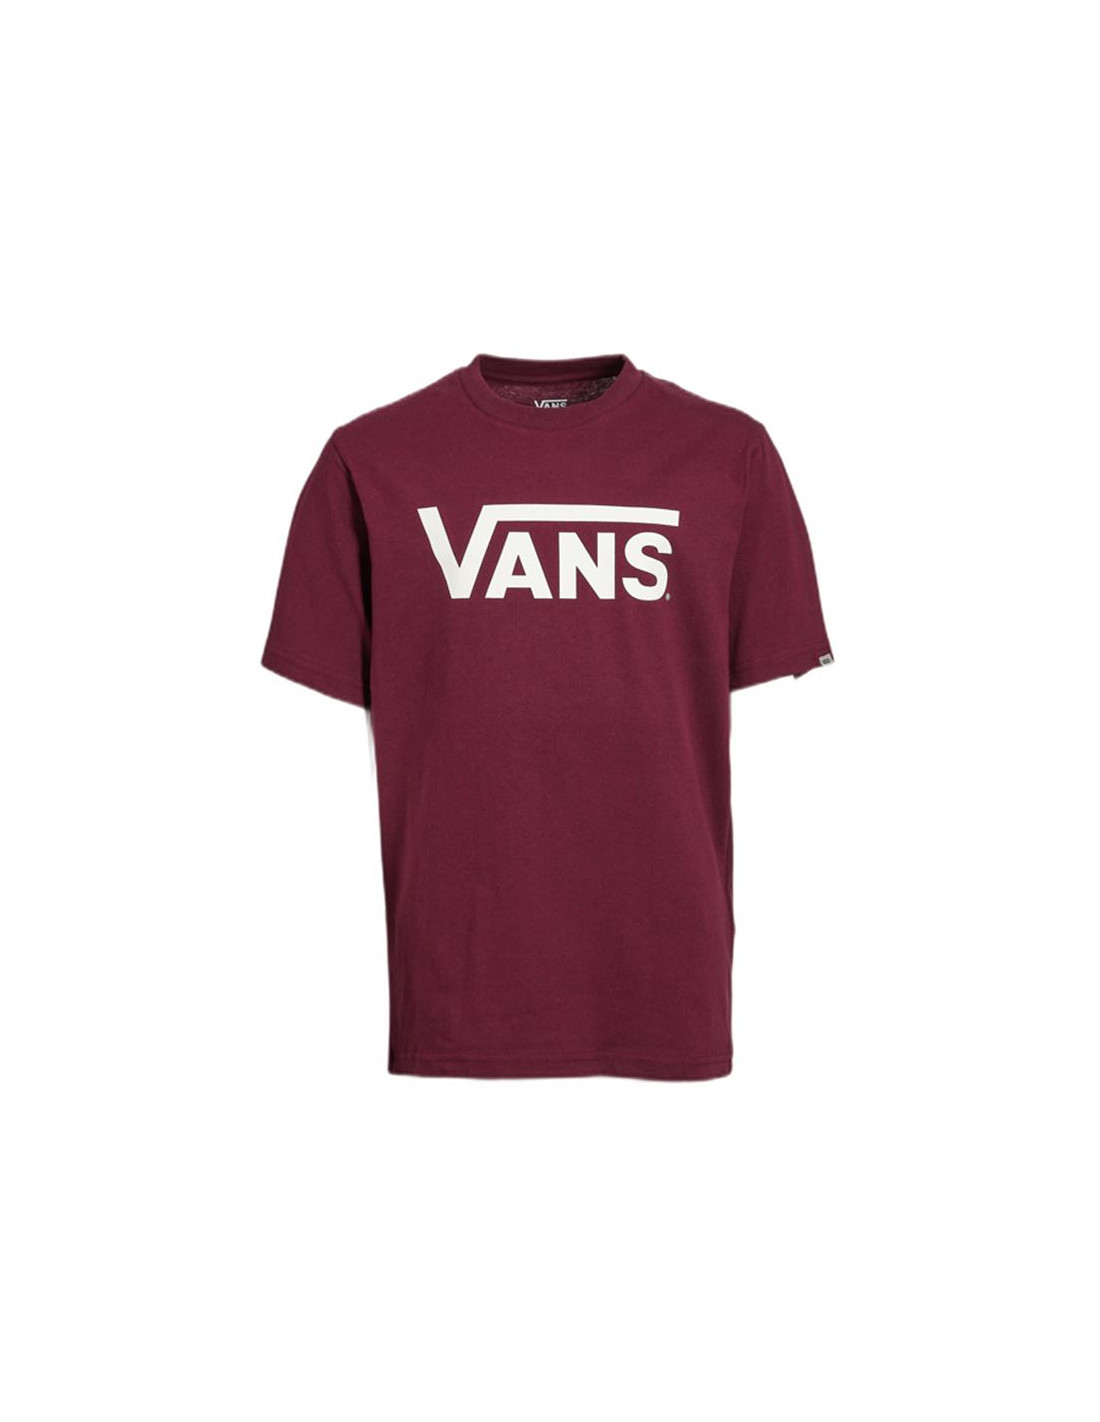 Camiseta vans drop v boy-b kids red